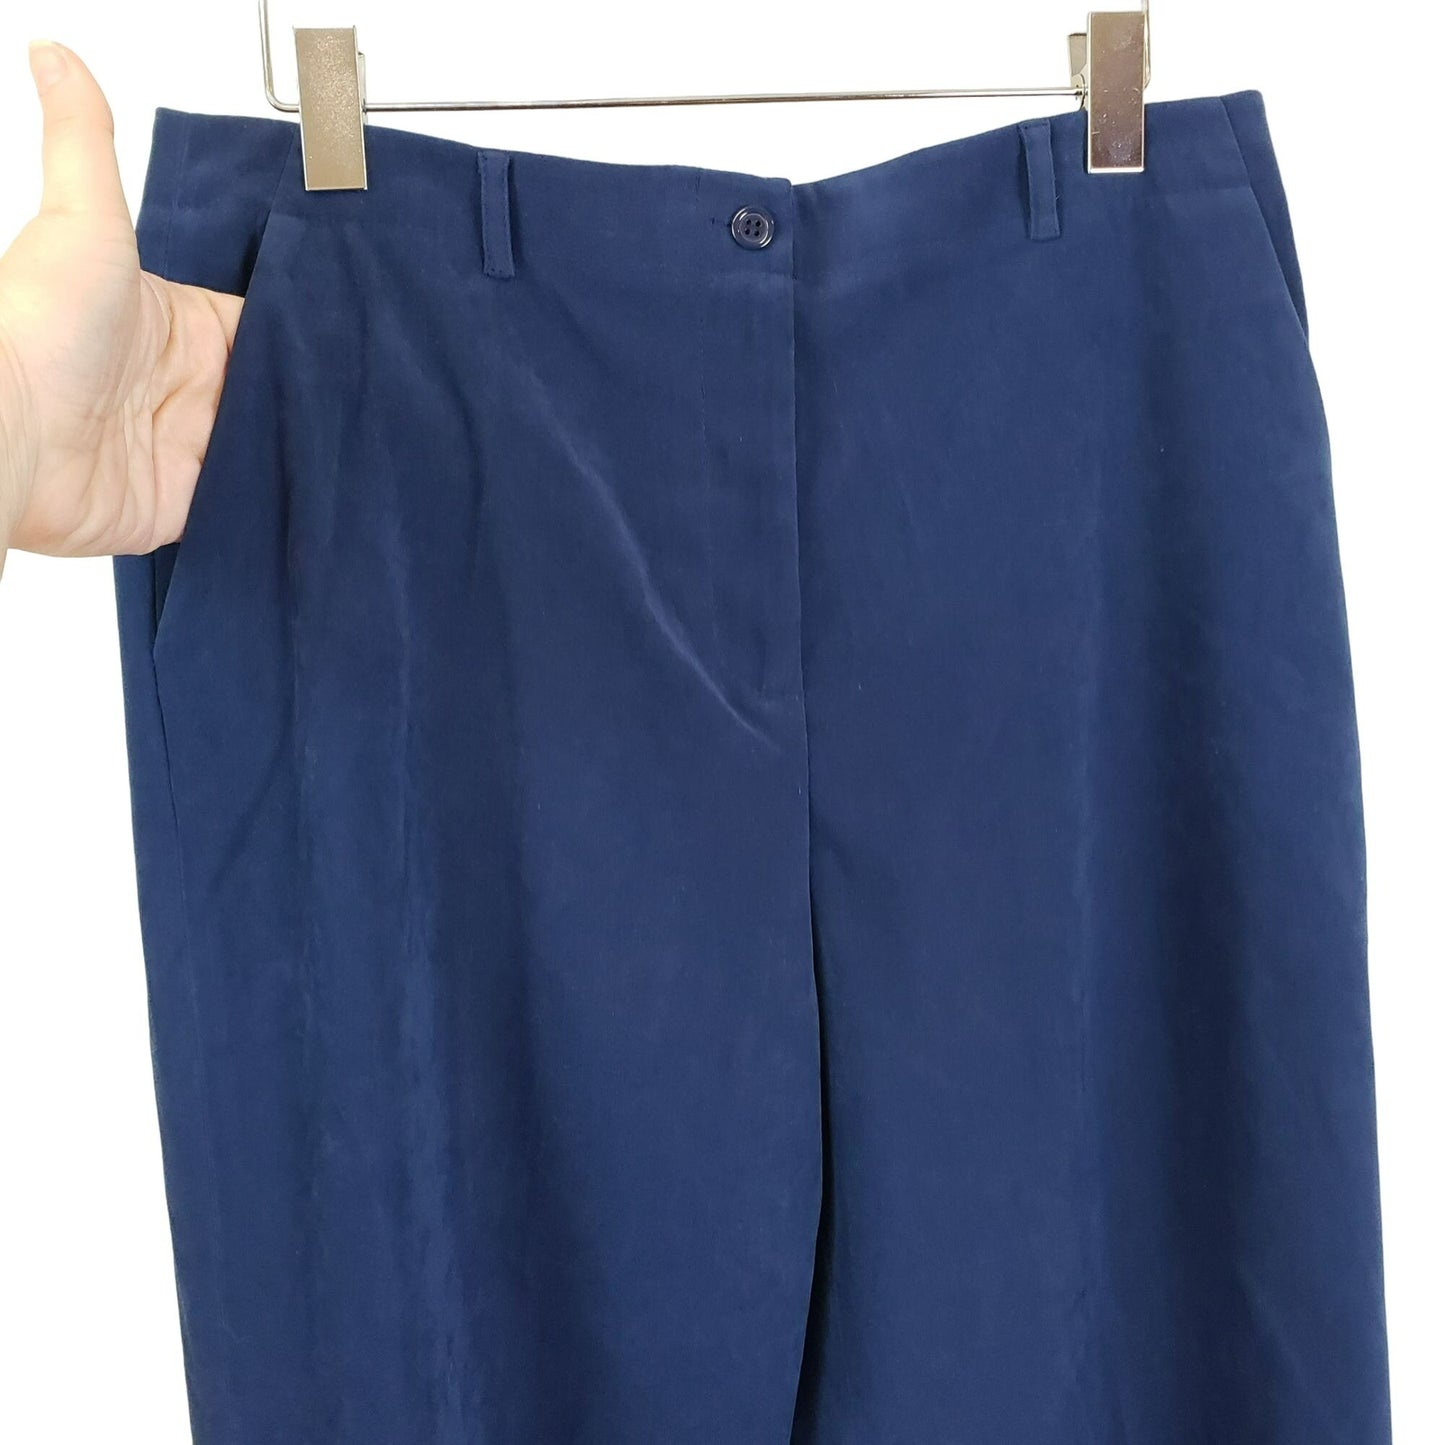 NWT Talbots Microfiber Stretch Trouser Pants Size 12